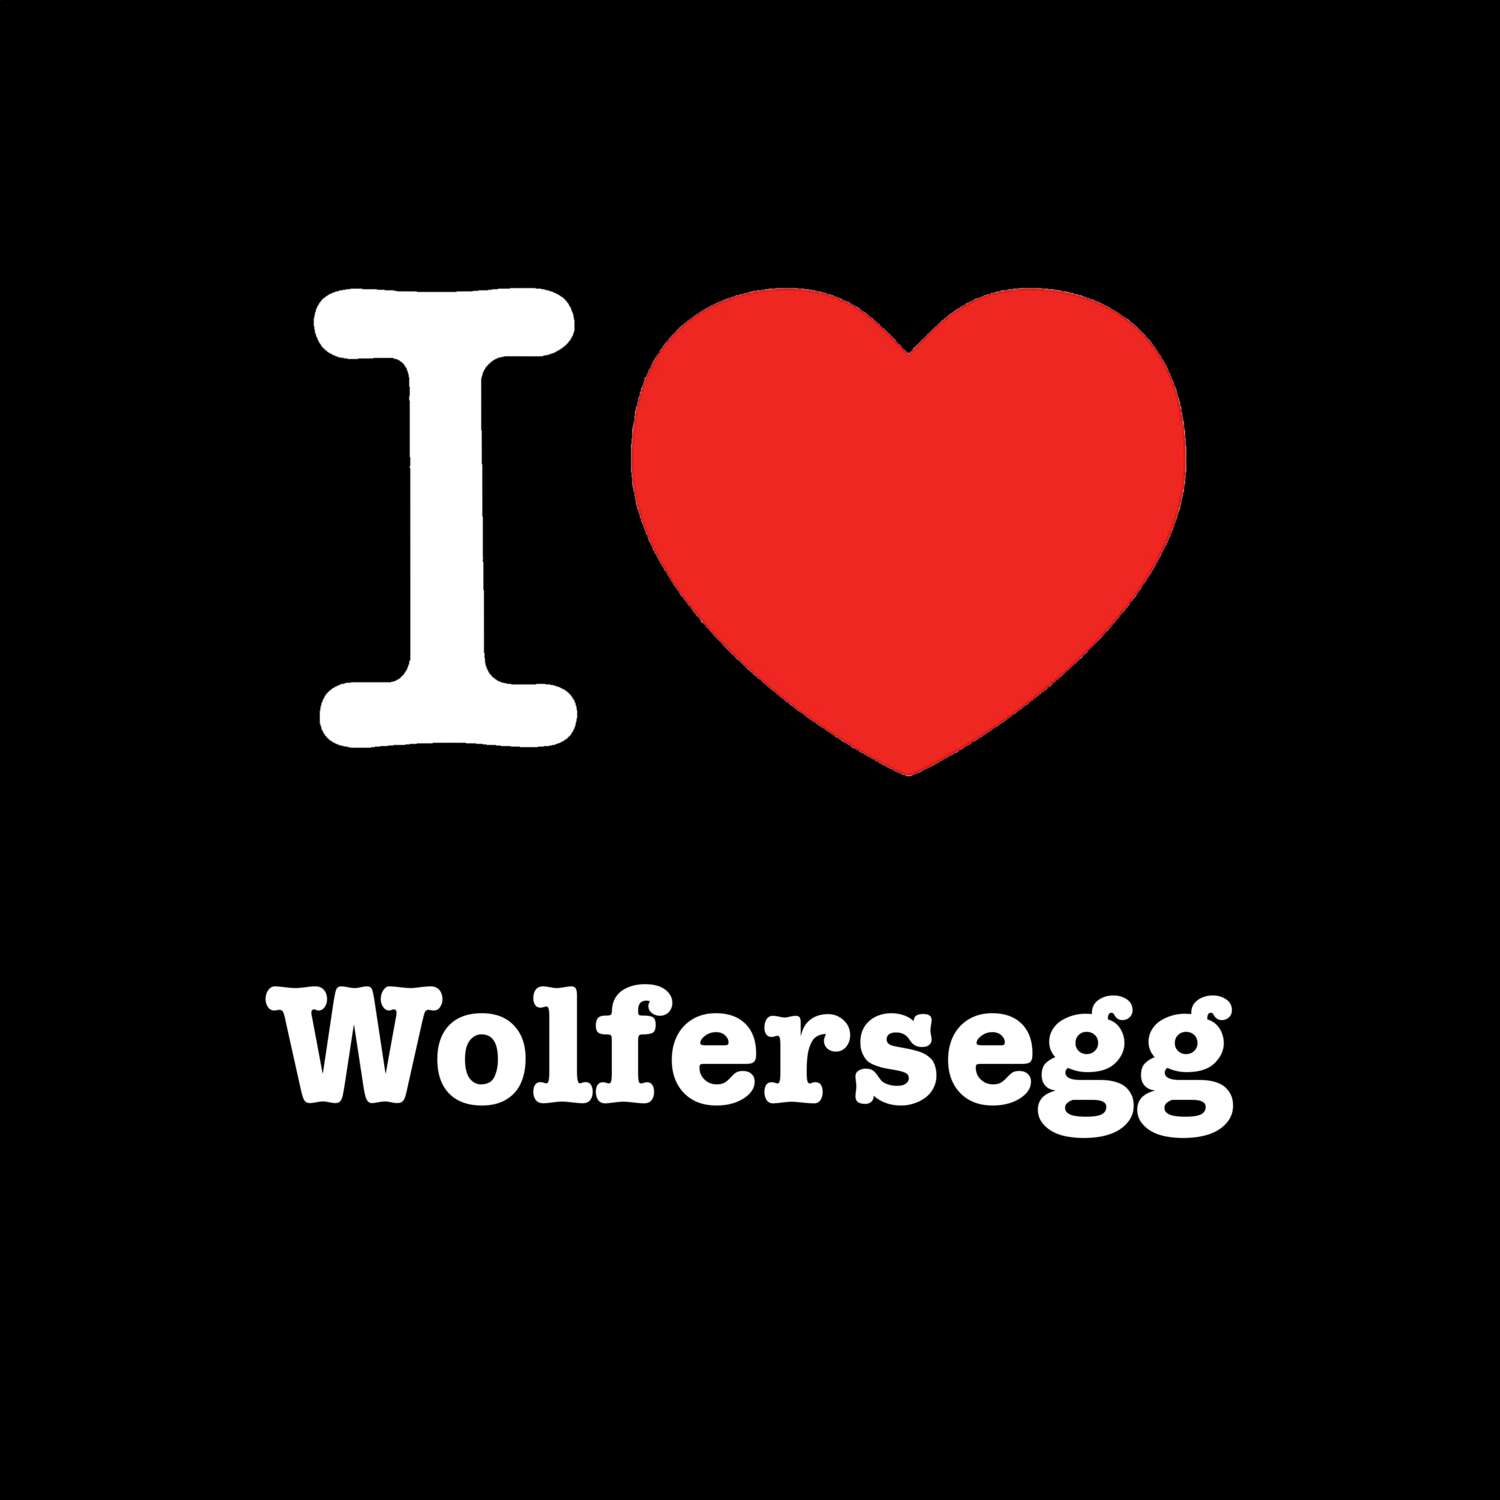 Wolfersegg T-Shirt »I love«